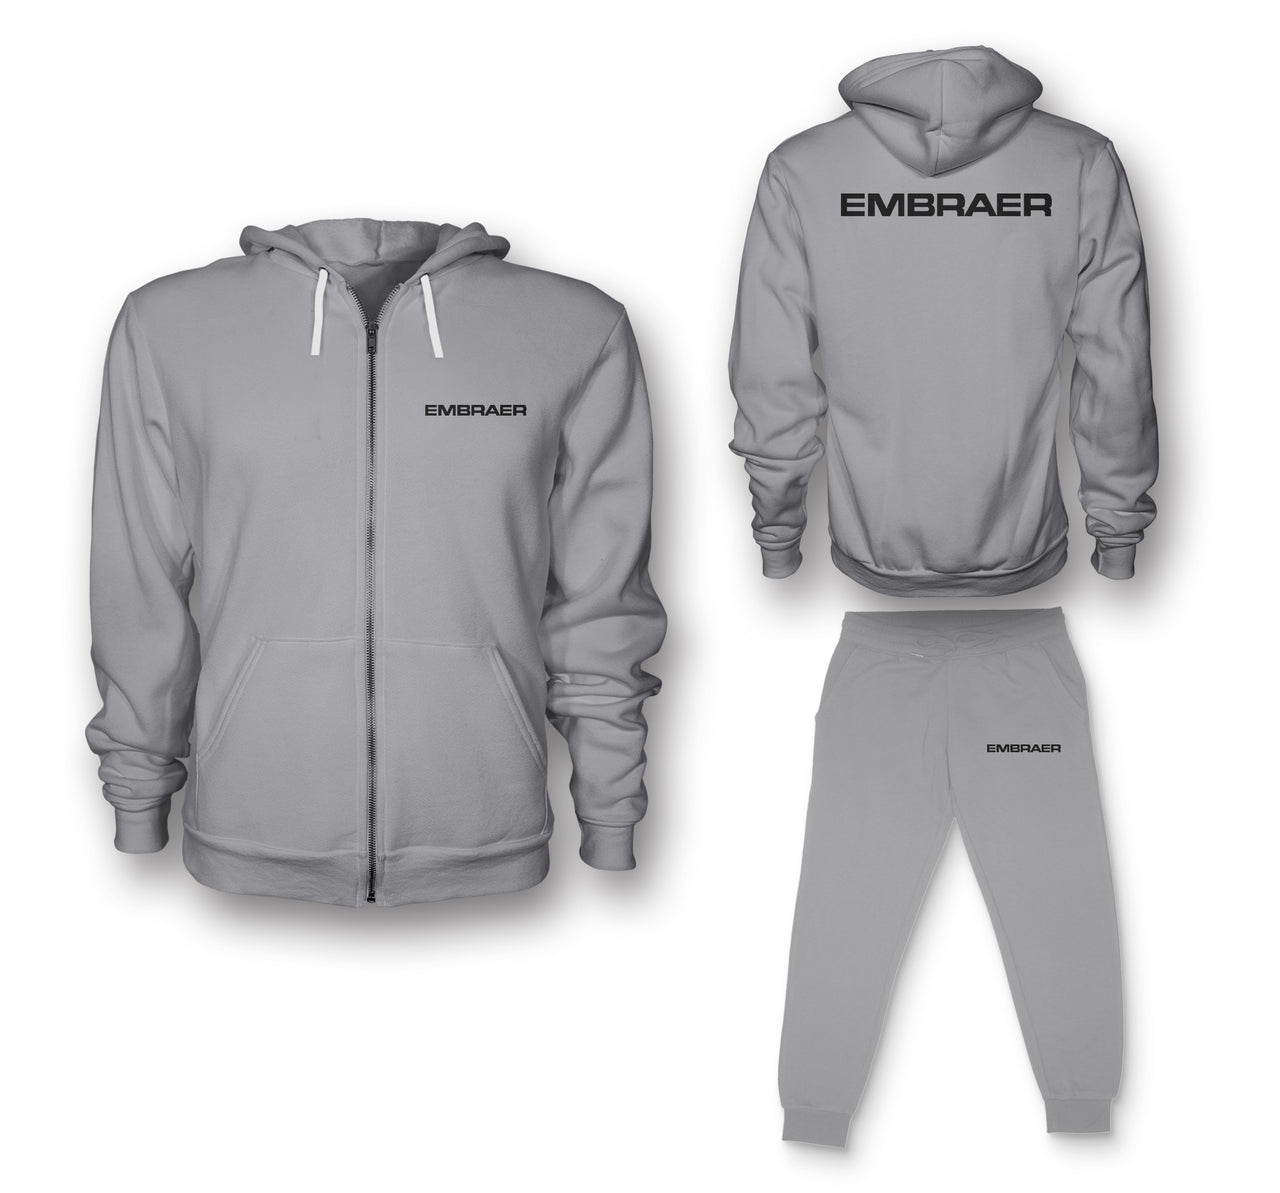 Embraer & Text Designed Zipped Hoodies & Sweatpants Set